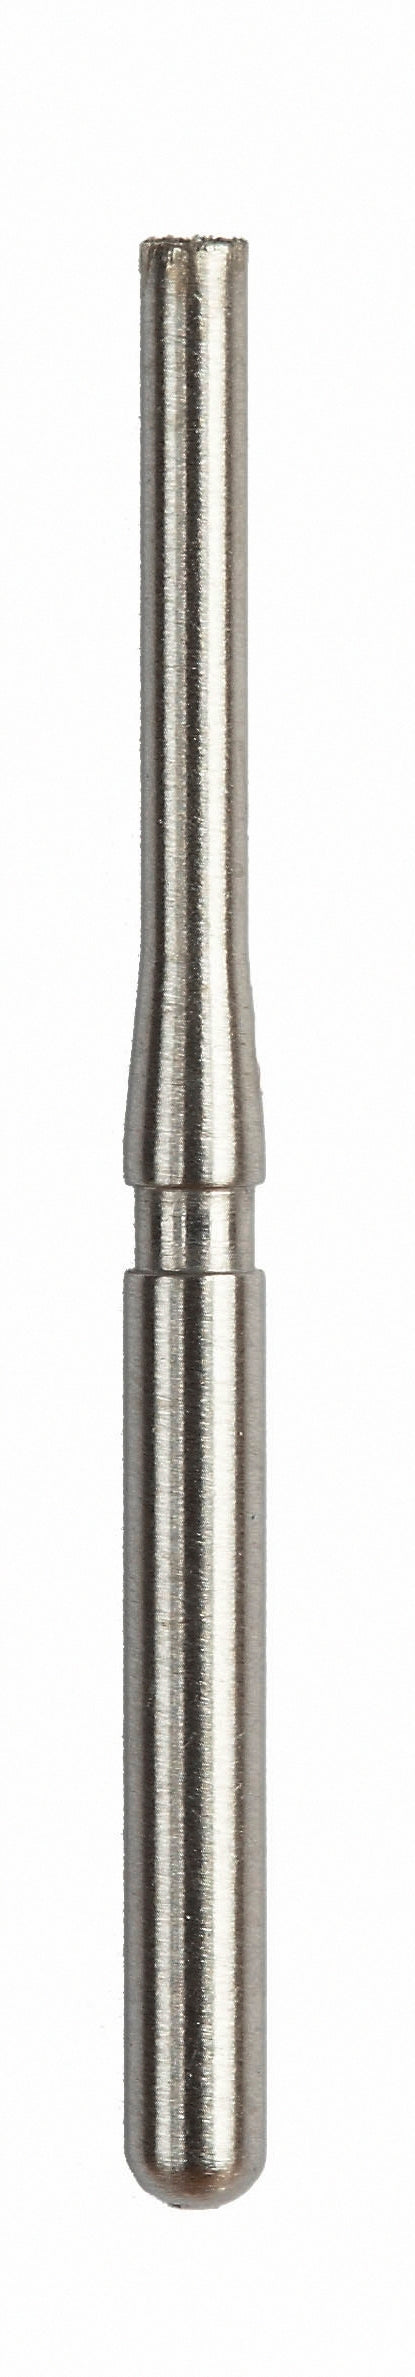 839 012 Medium-End Cutting Bur-Diamond Coated (Pack of 6)